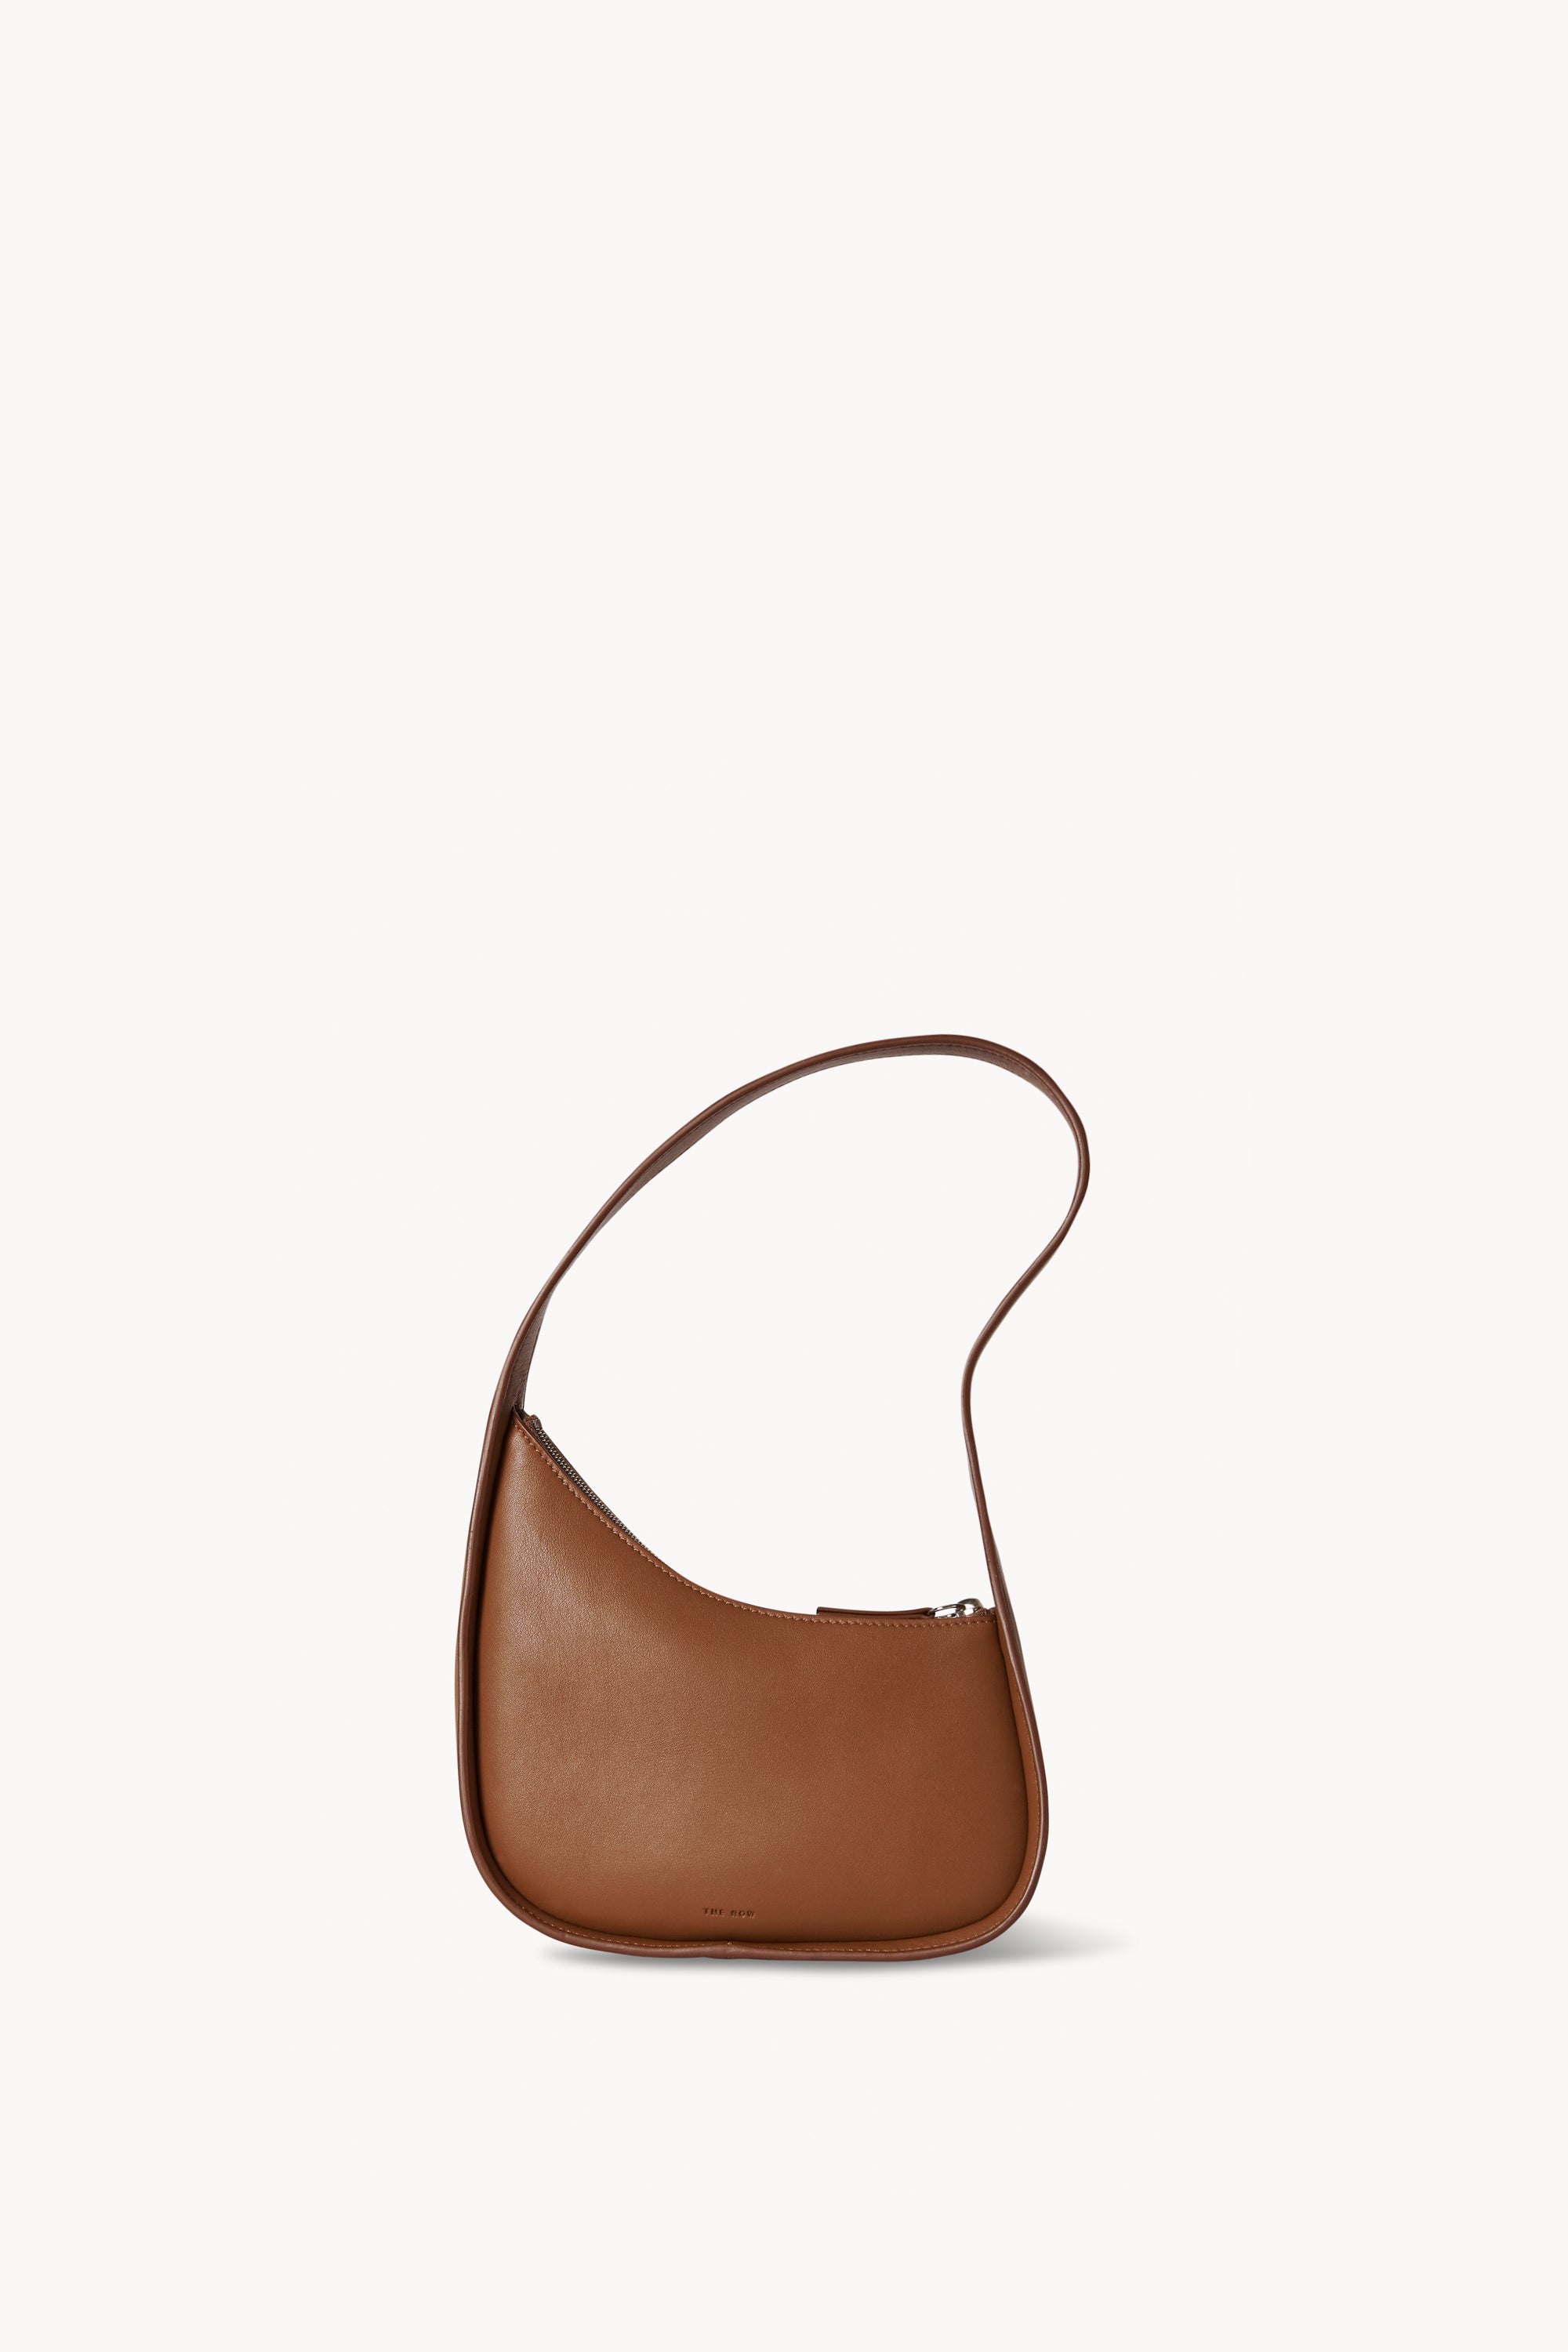 Half Moon Bag Tan in Leather – The Row